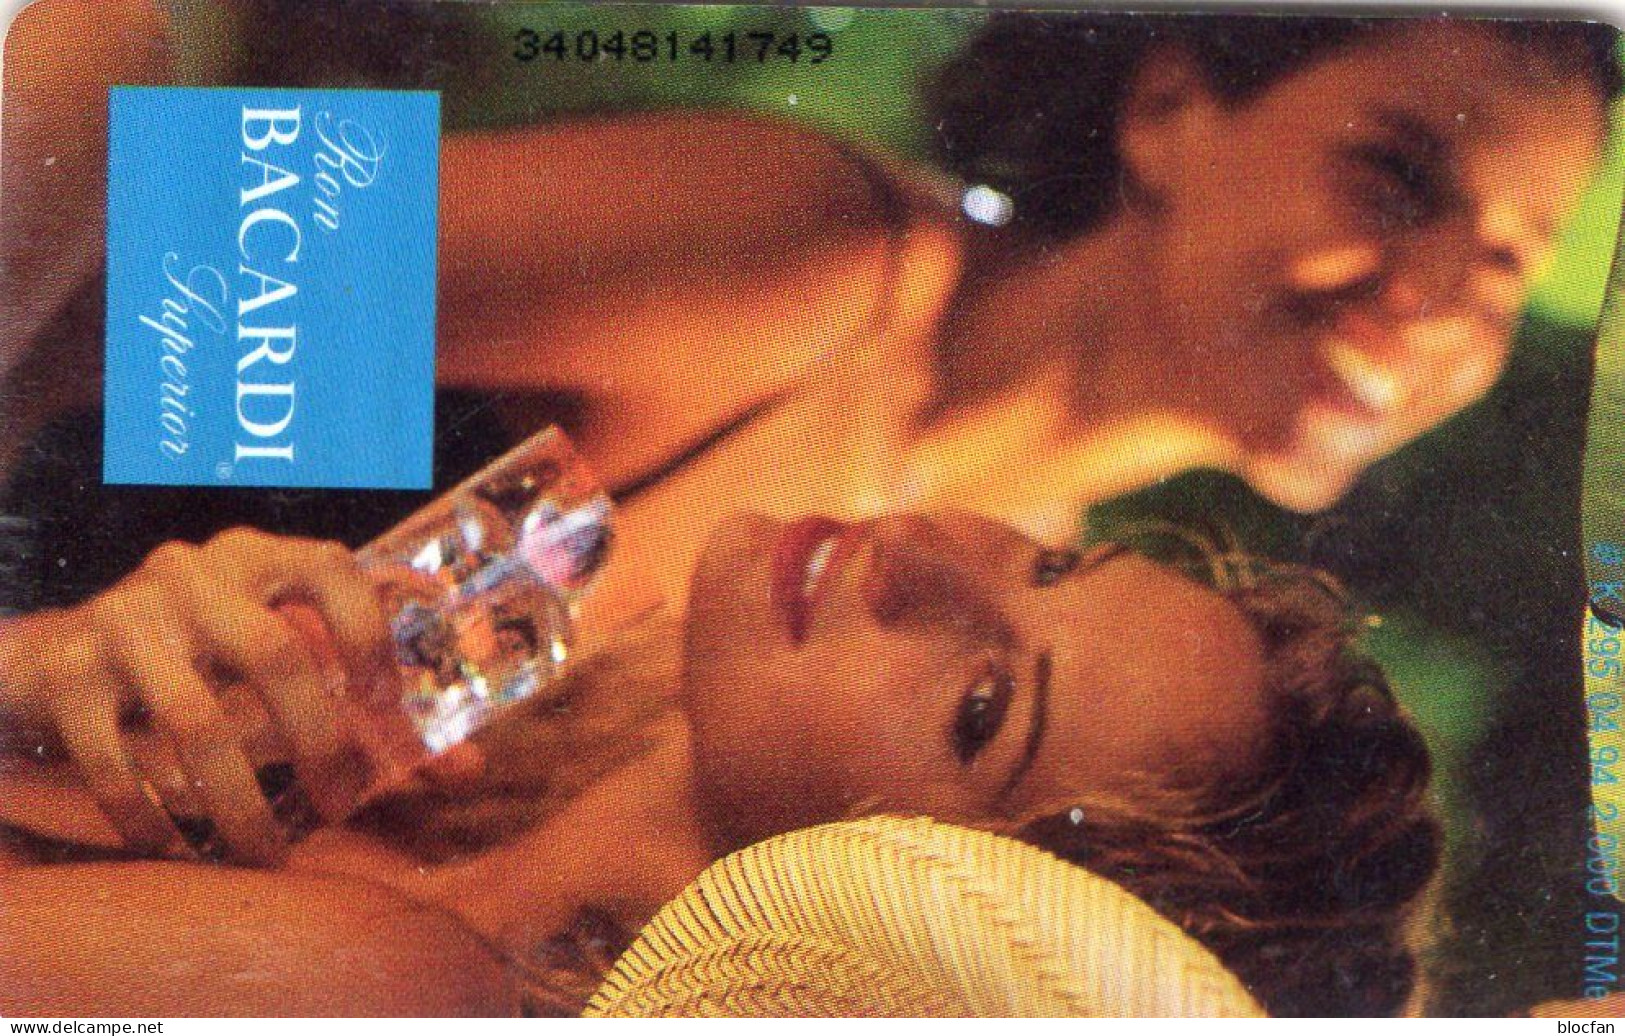 BarcadiColaMix TK K 295/1994 O 25€ Barcadi-Fledermaus Glas Mit Rum Erfrischungs-Getränk TC Ron Cola Phonecard Of Germany - K-Series: Kundenserie